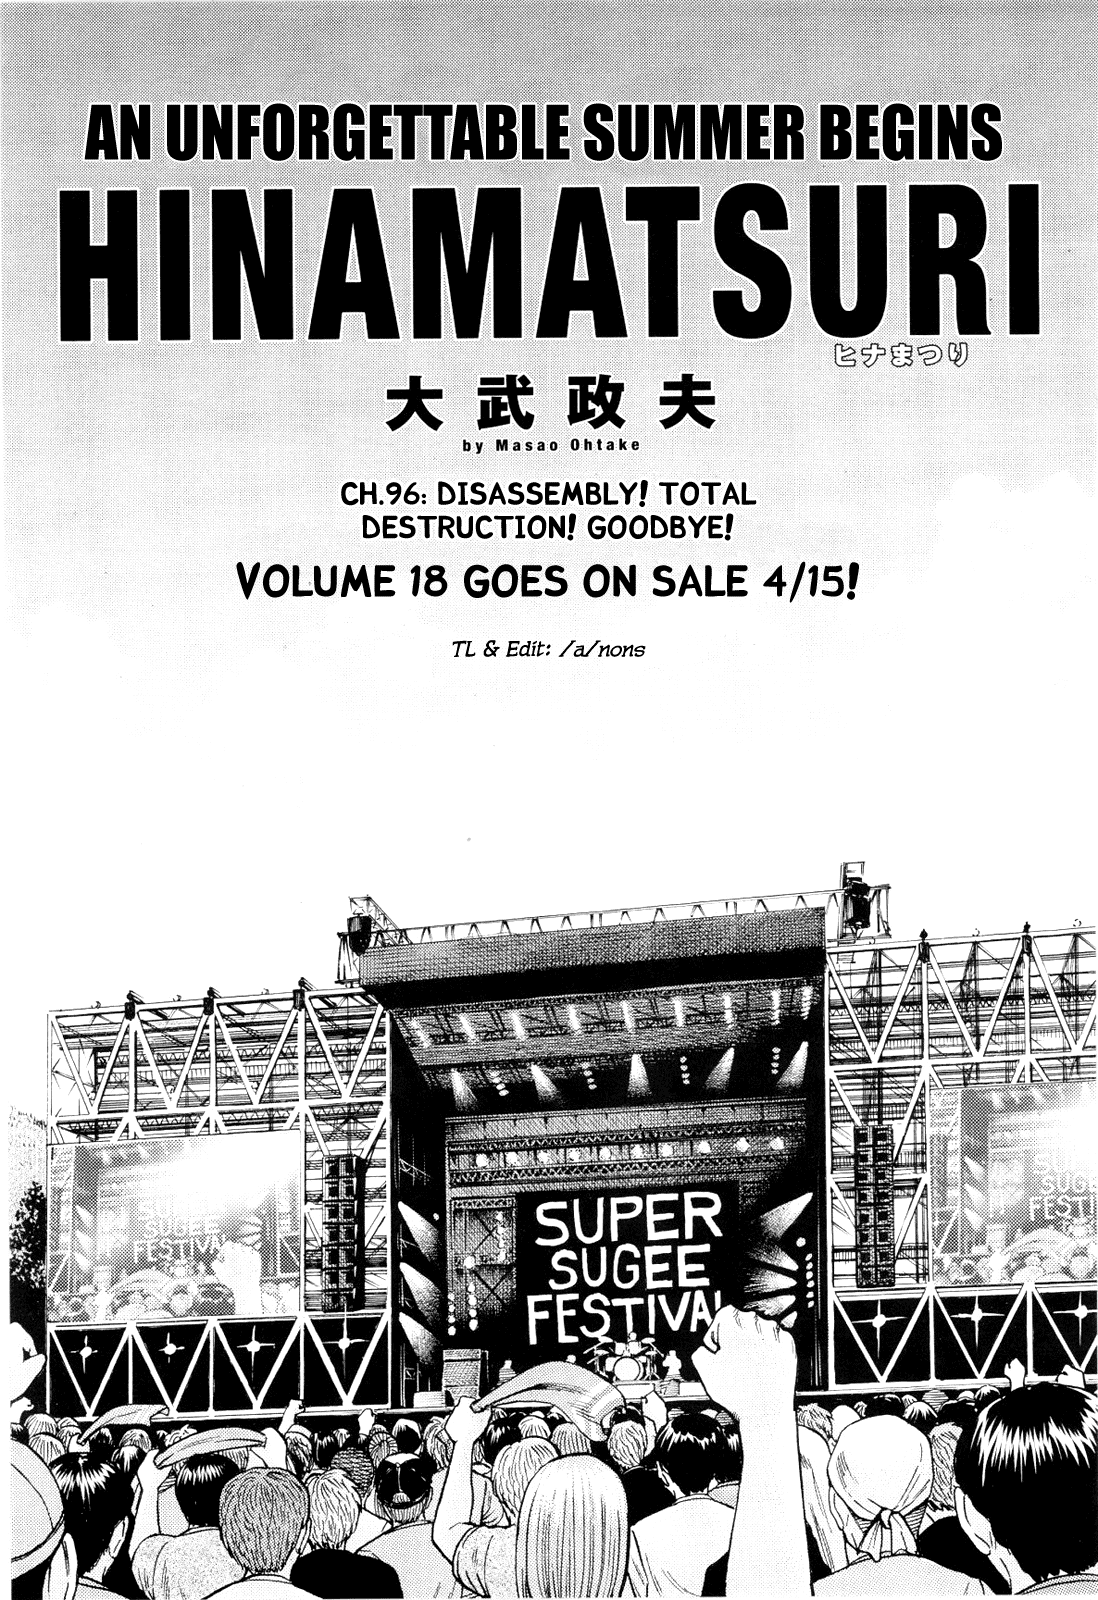 Hinamatsuri Vol.19-Chapter.96-Disassembly!-Total-Destruction!-Goodbye! Image